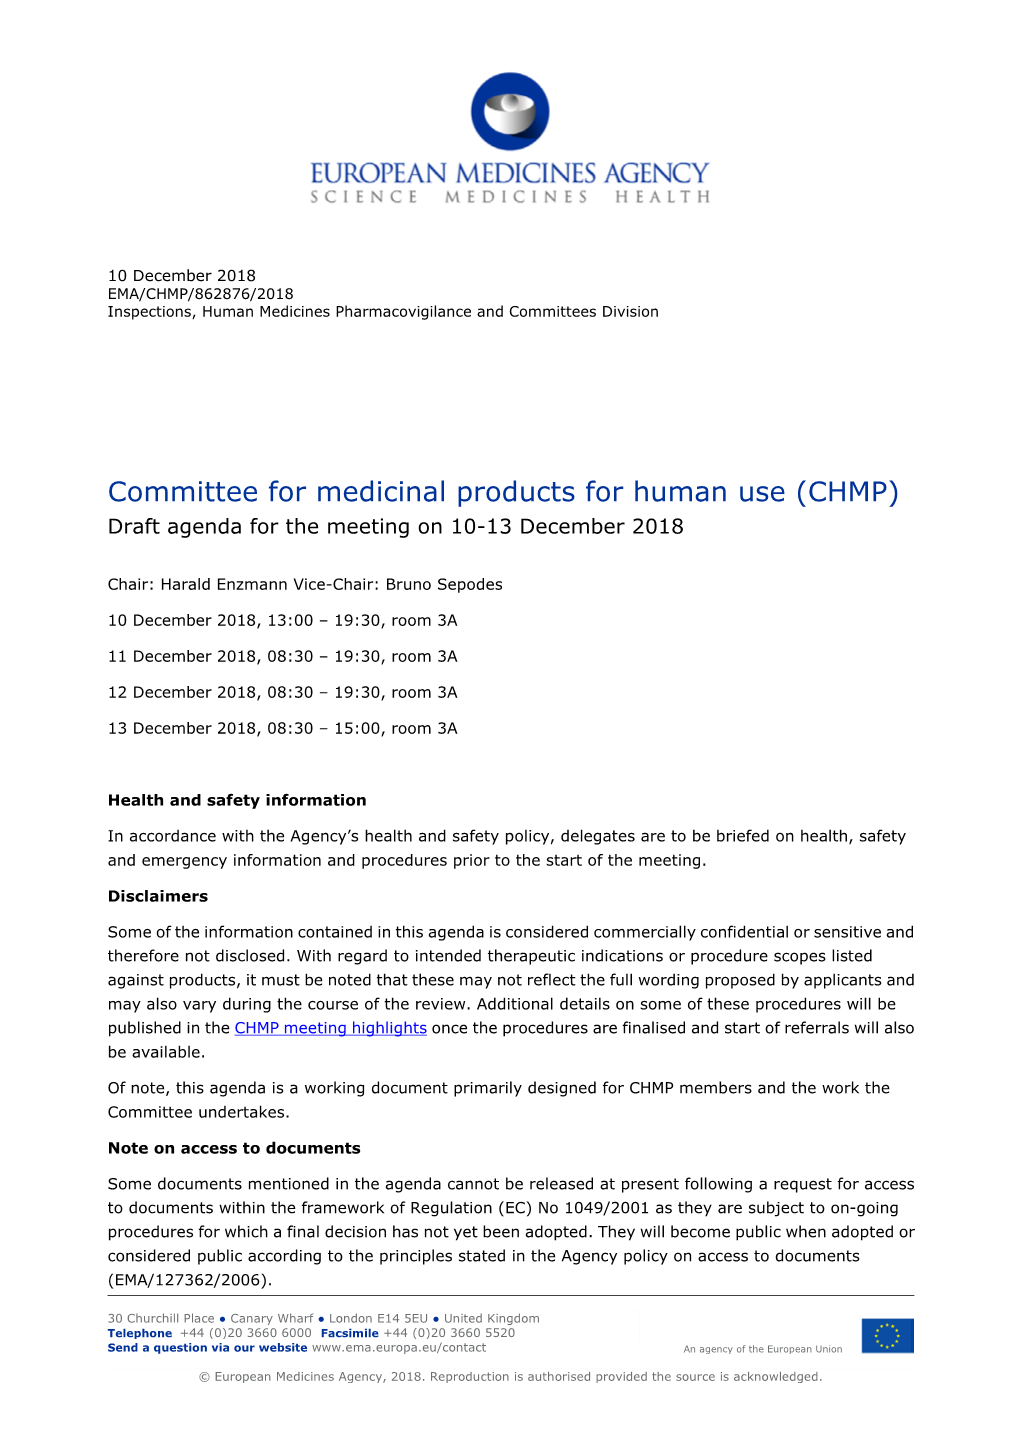 CHMP December 2018 Agenda for Publication